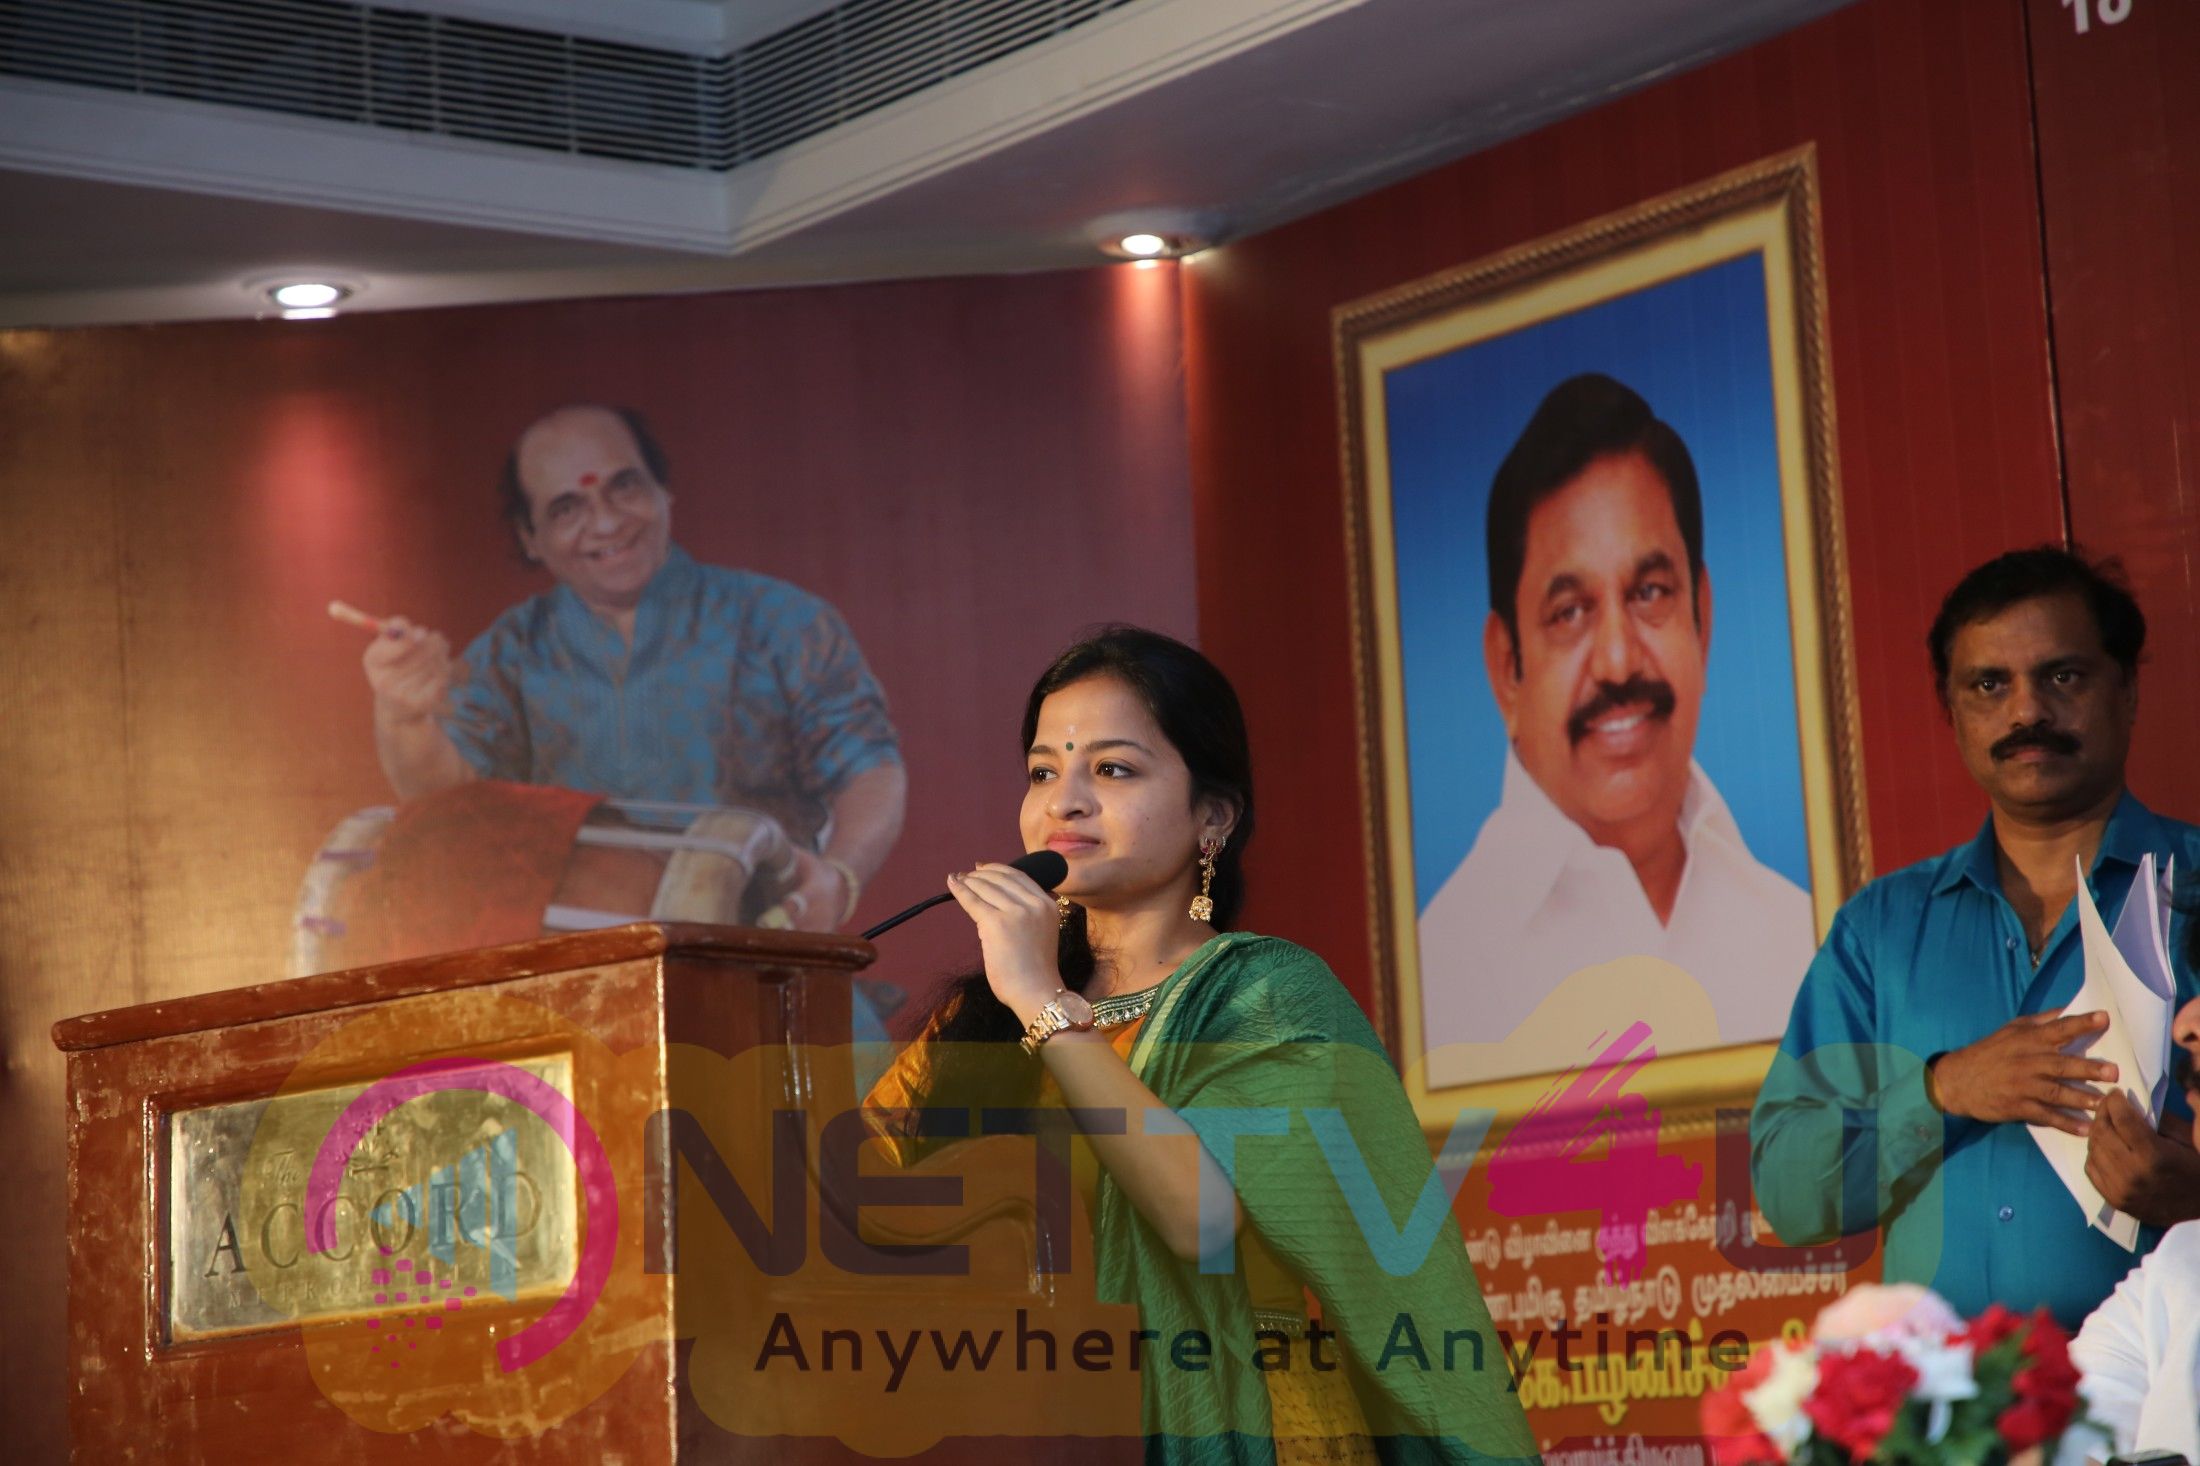 Chennaiyil Thiruvaiyaru Season 14 Press Meet Images Tamil Gallery